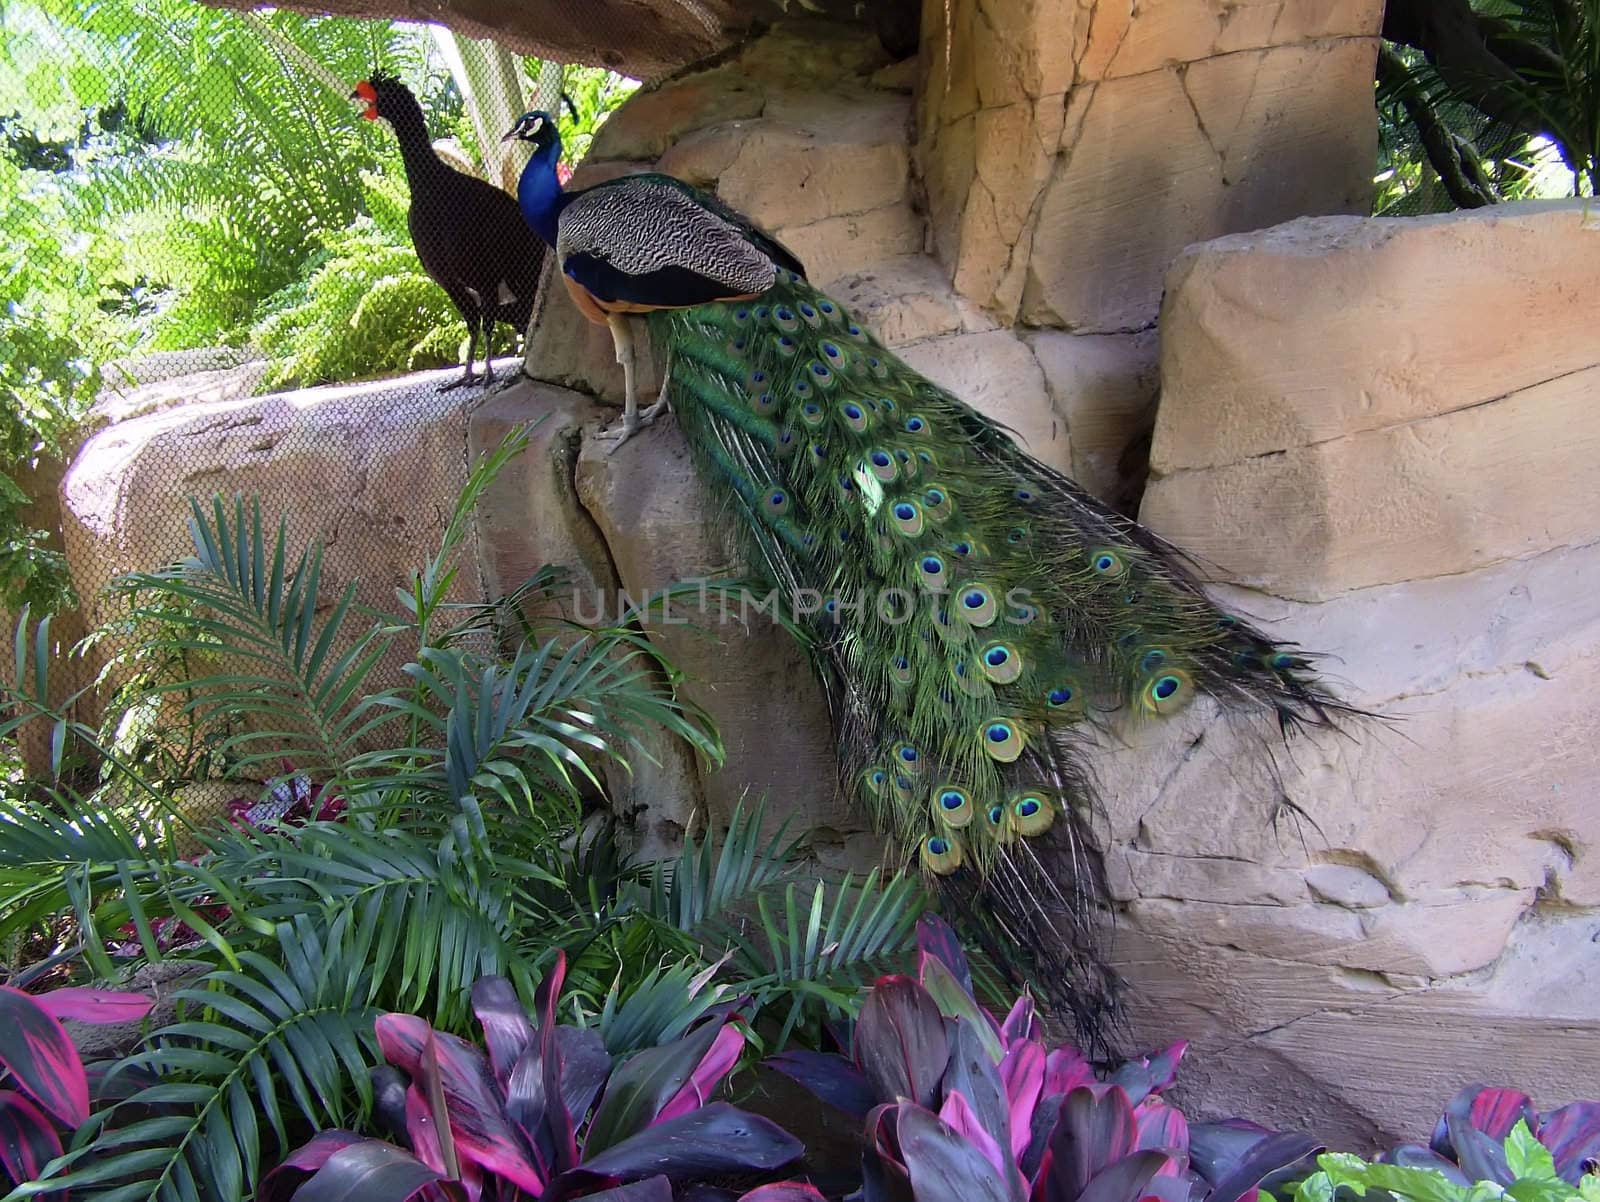 Exotic Bird Series - Photos depicting various birds found in the tropics